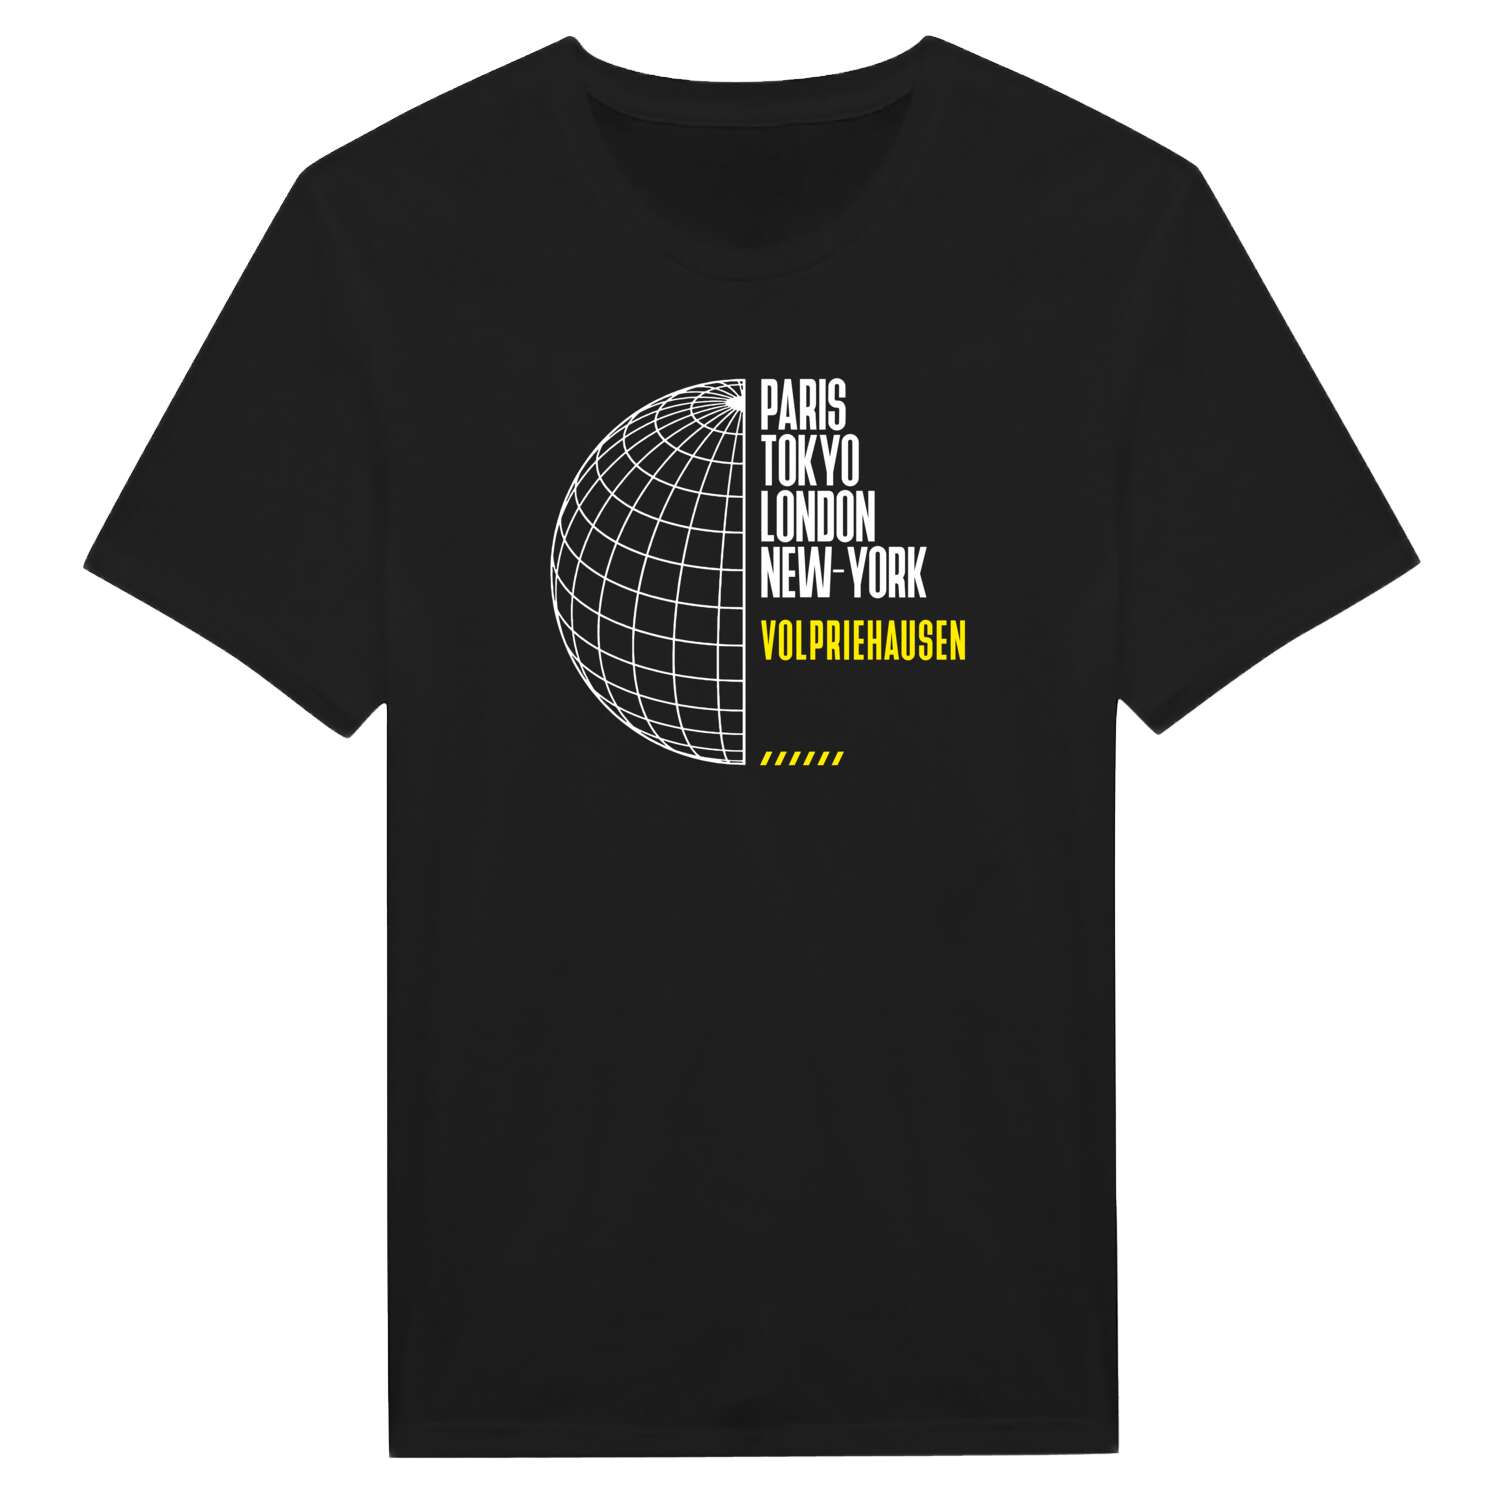 Volpriehausen T-Shirt »Paris Tokyo London«